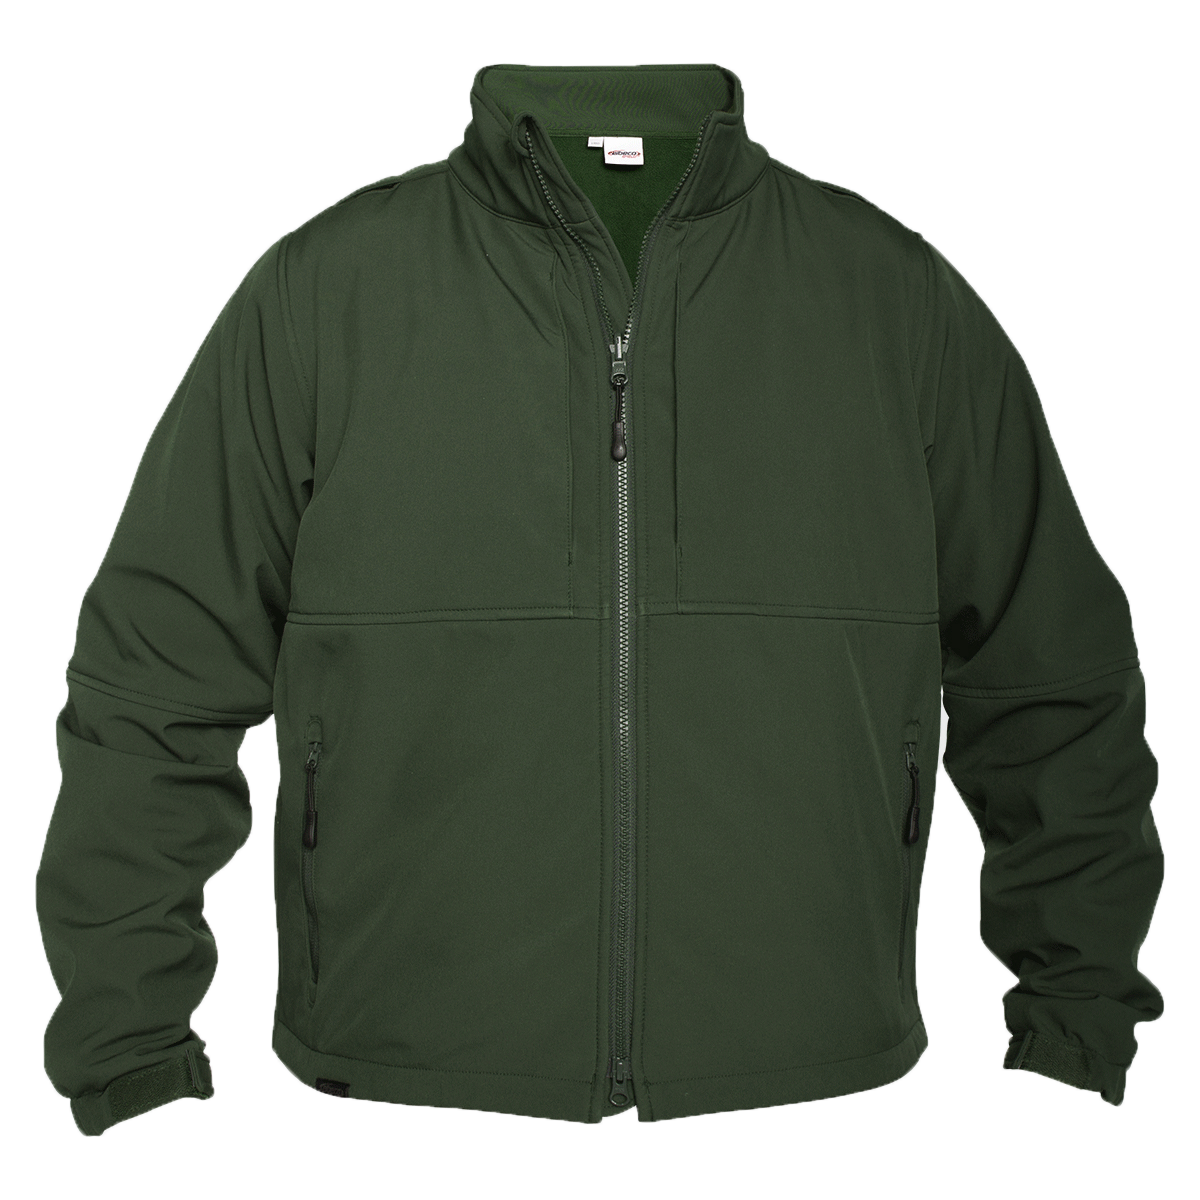 Elbeco Shield Performance Soft Shell Jacket – Security Uniform